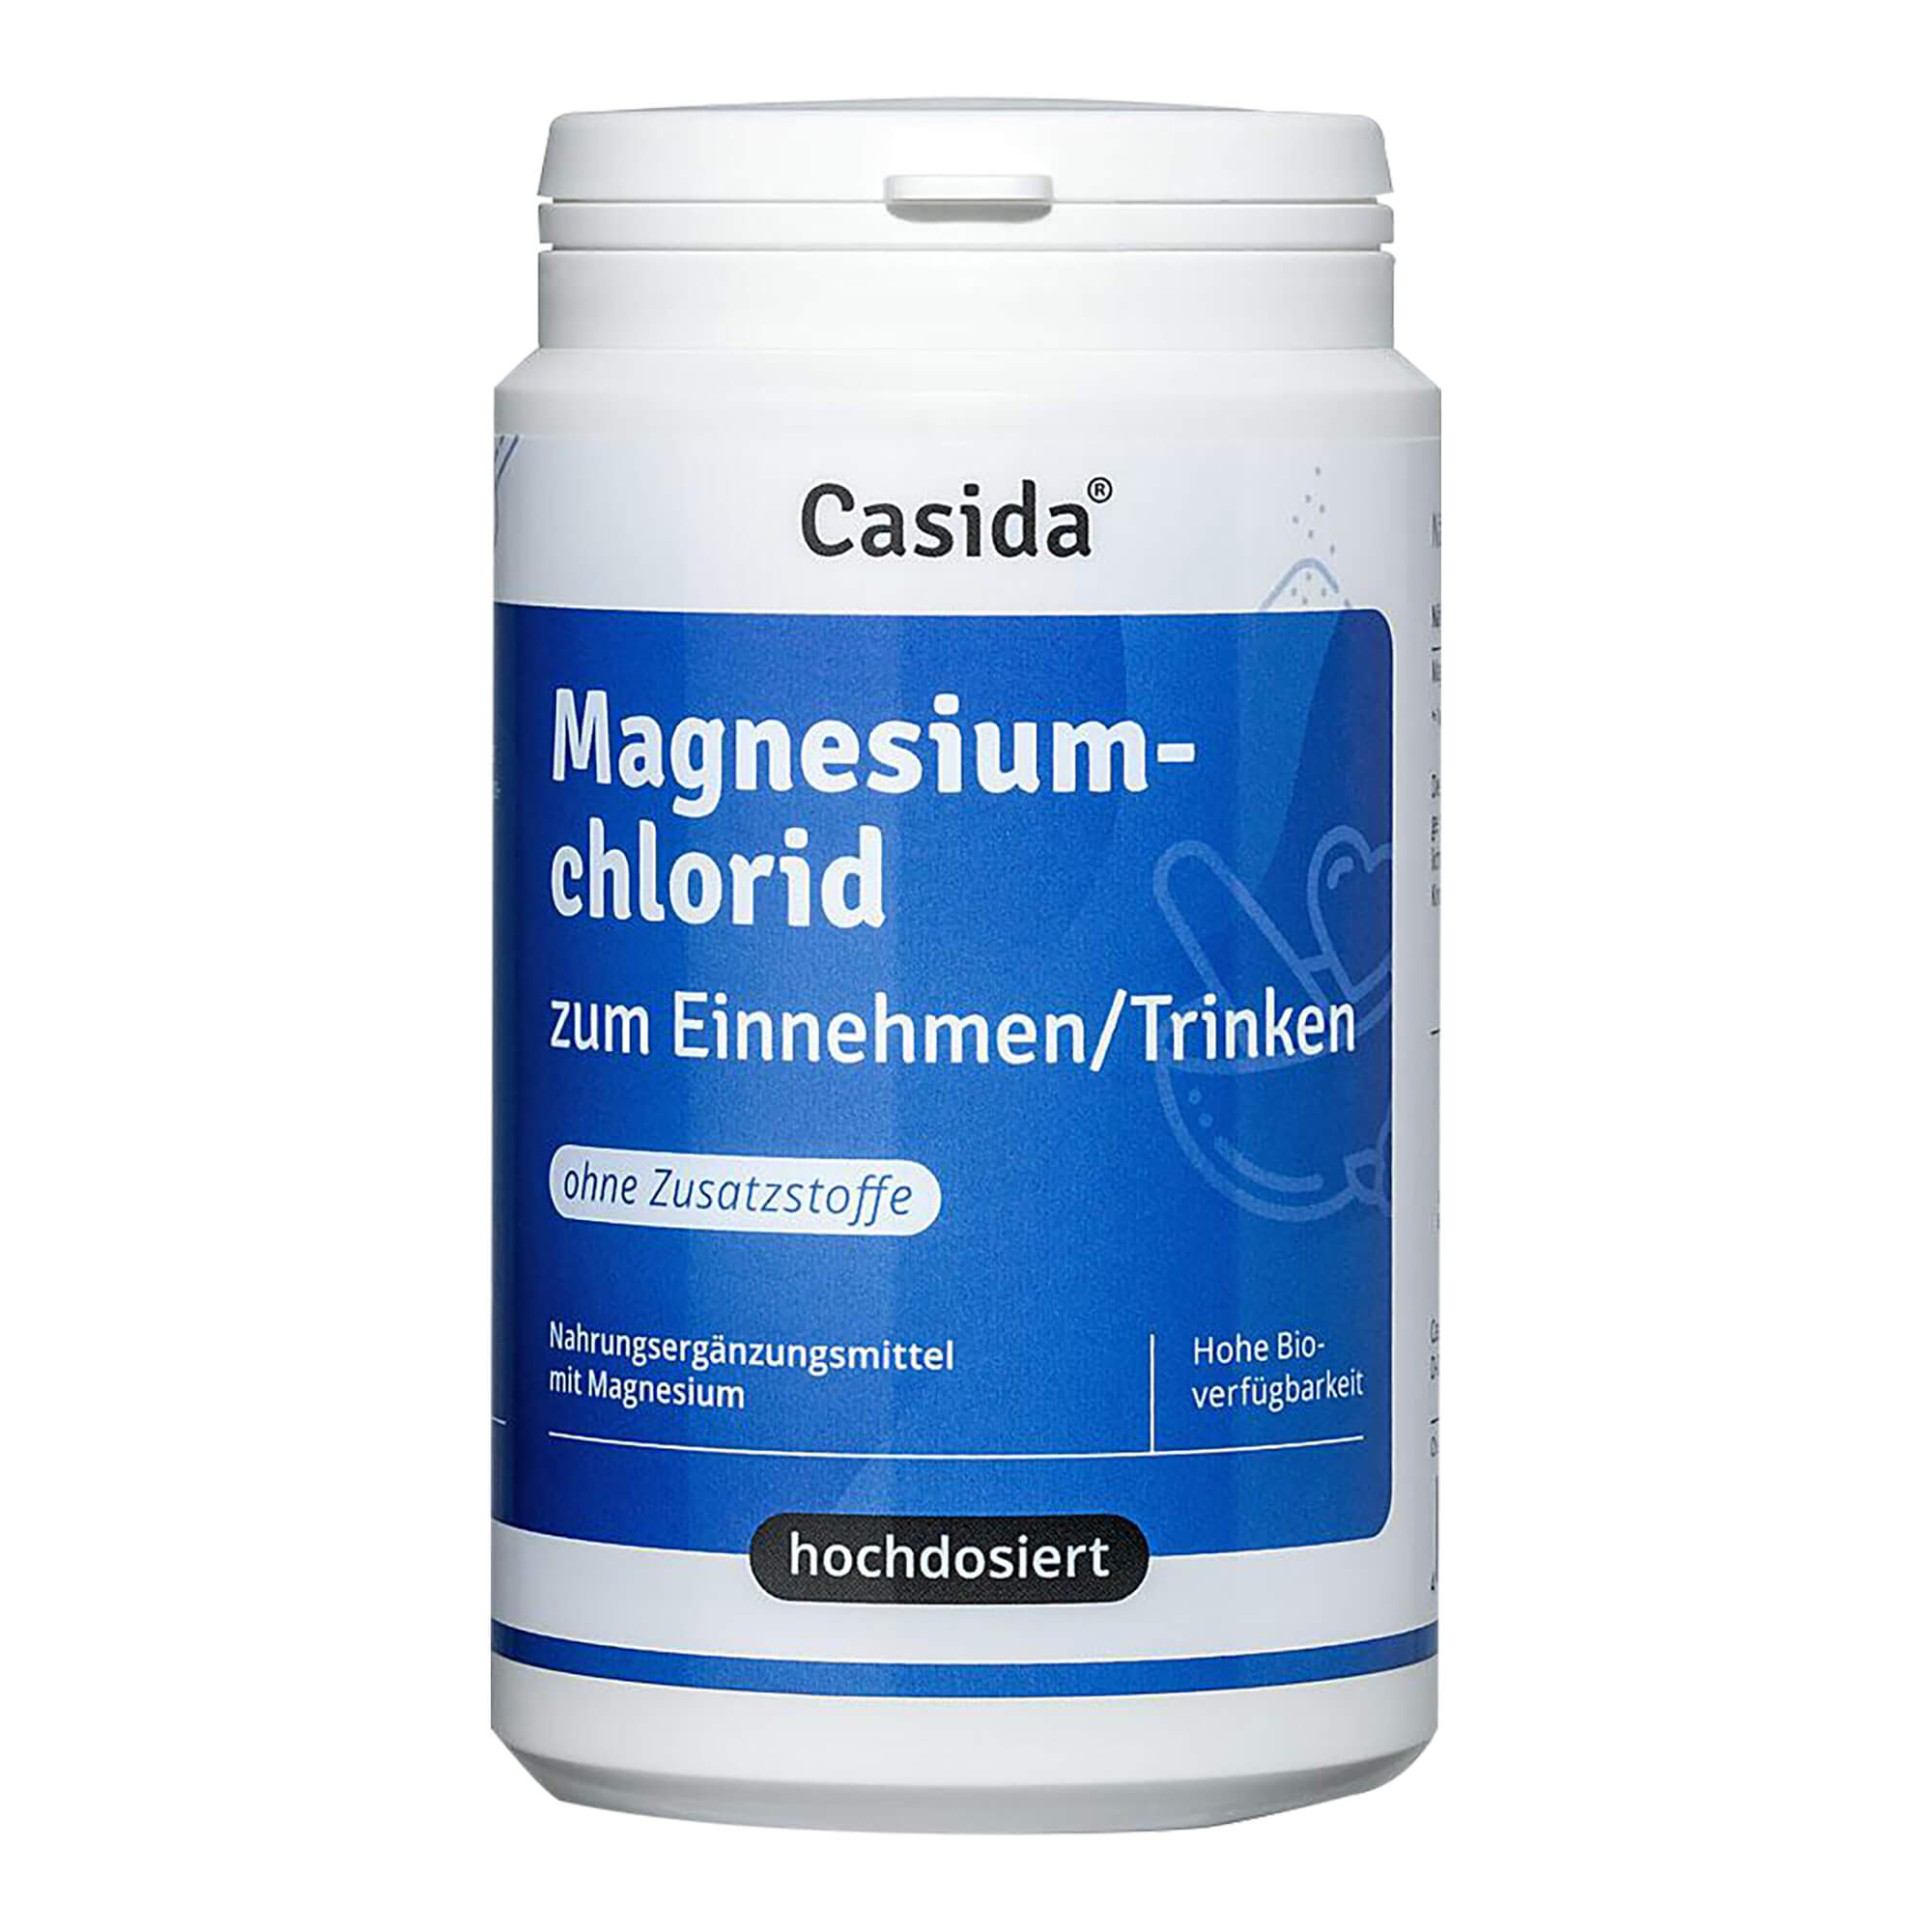 Nahrungsergänzungsmittel mit Magnesium.